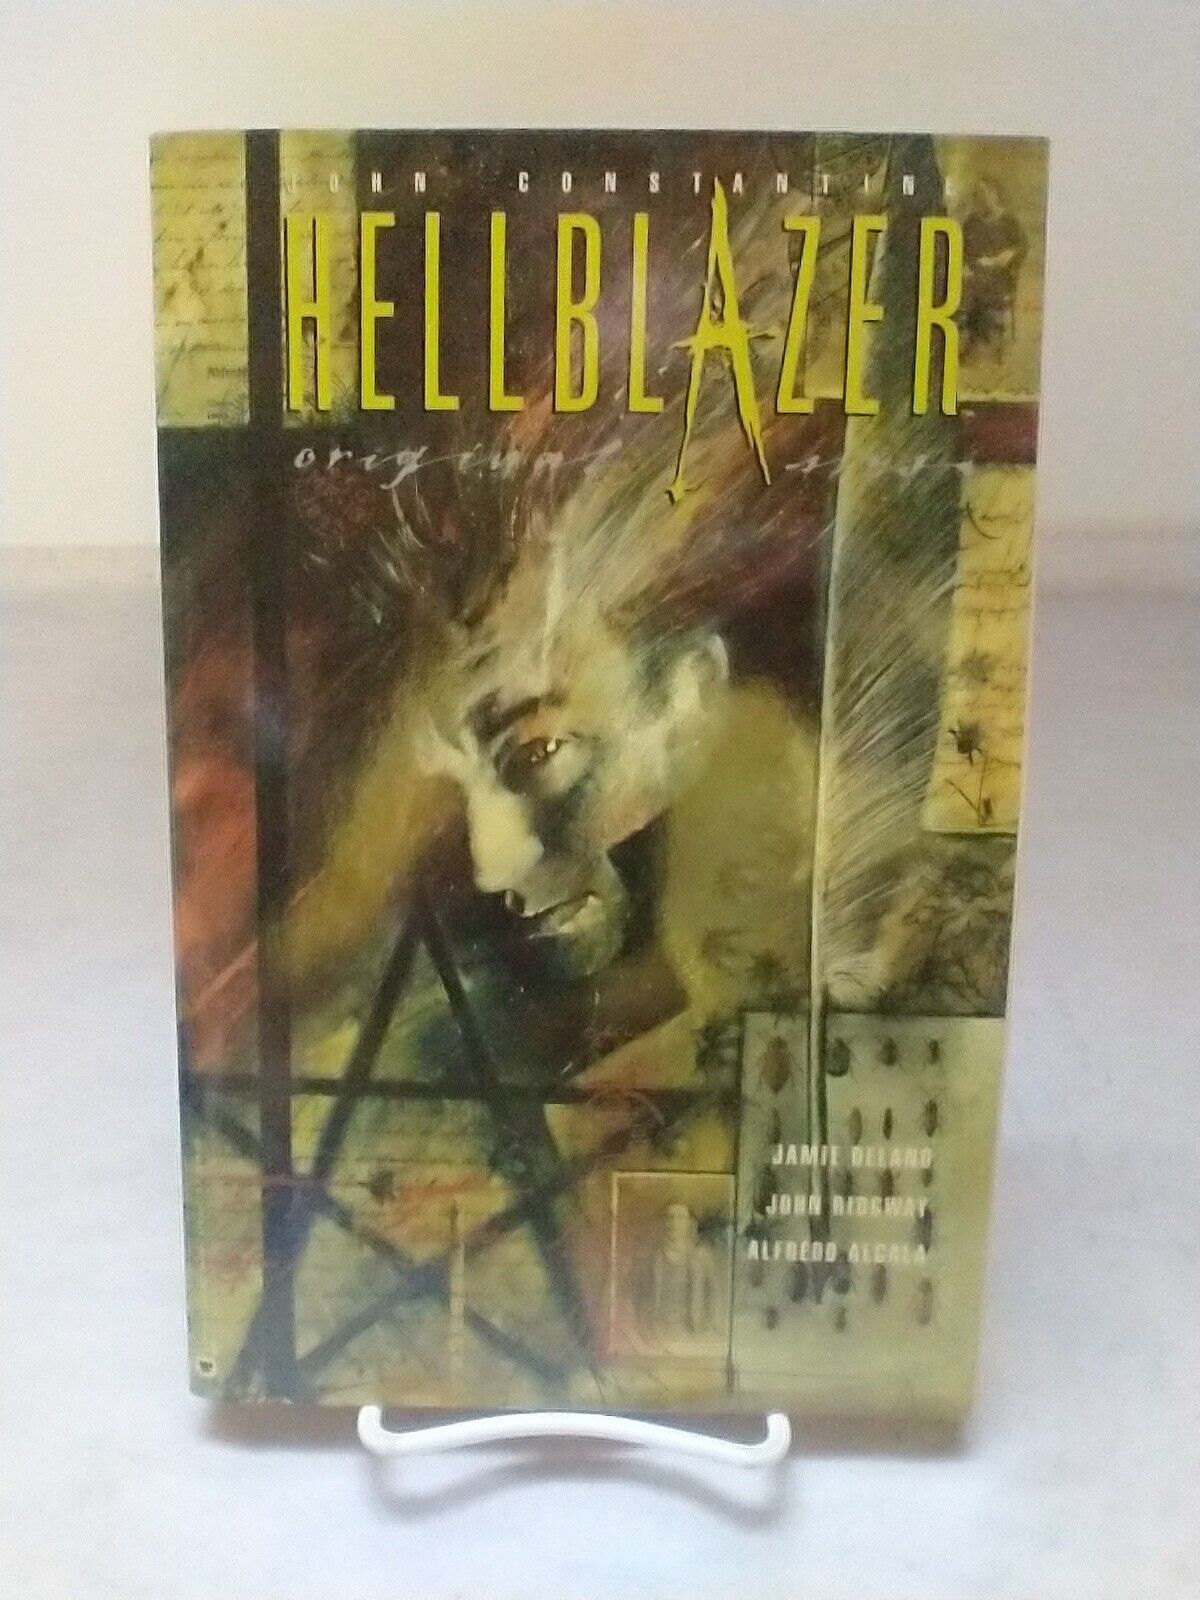 John Constantine Hellblazer: Original Sins Trade Paperback Volume 1 Vintage 1993